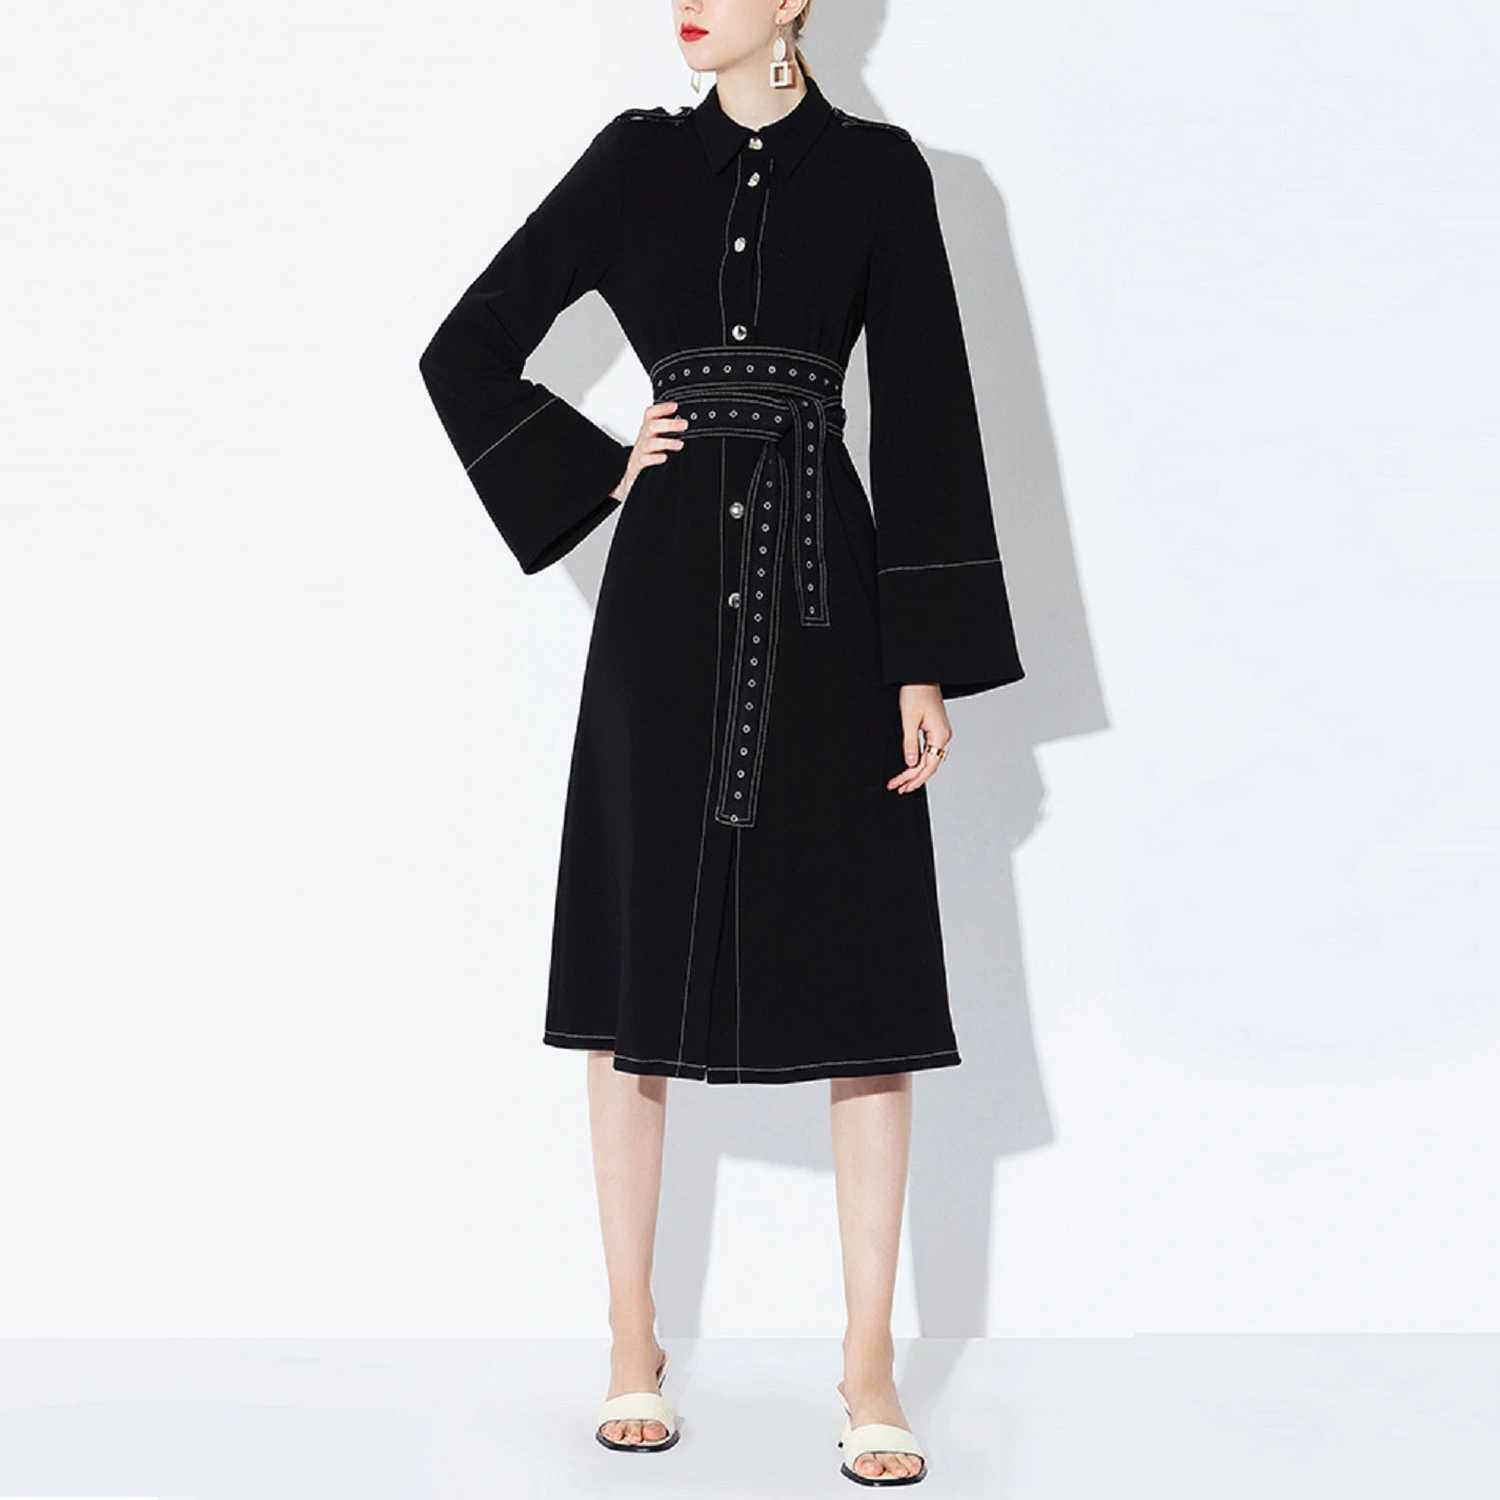 New-Design-Long-Sleeve-Slim-Autumn-High-Fashion-Woman-s-Dress-Coat.webp (1).jpg